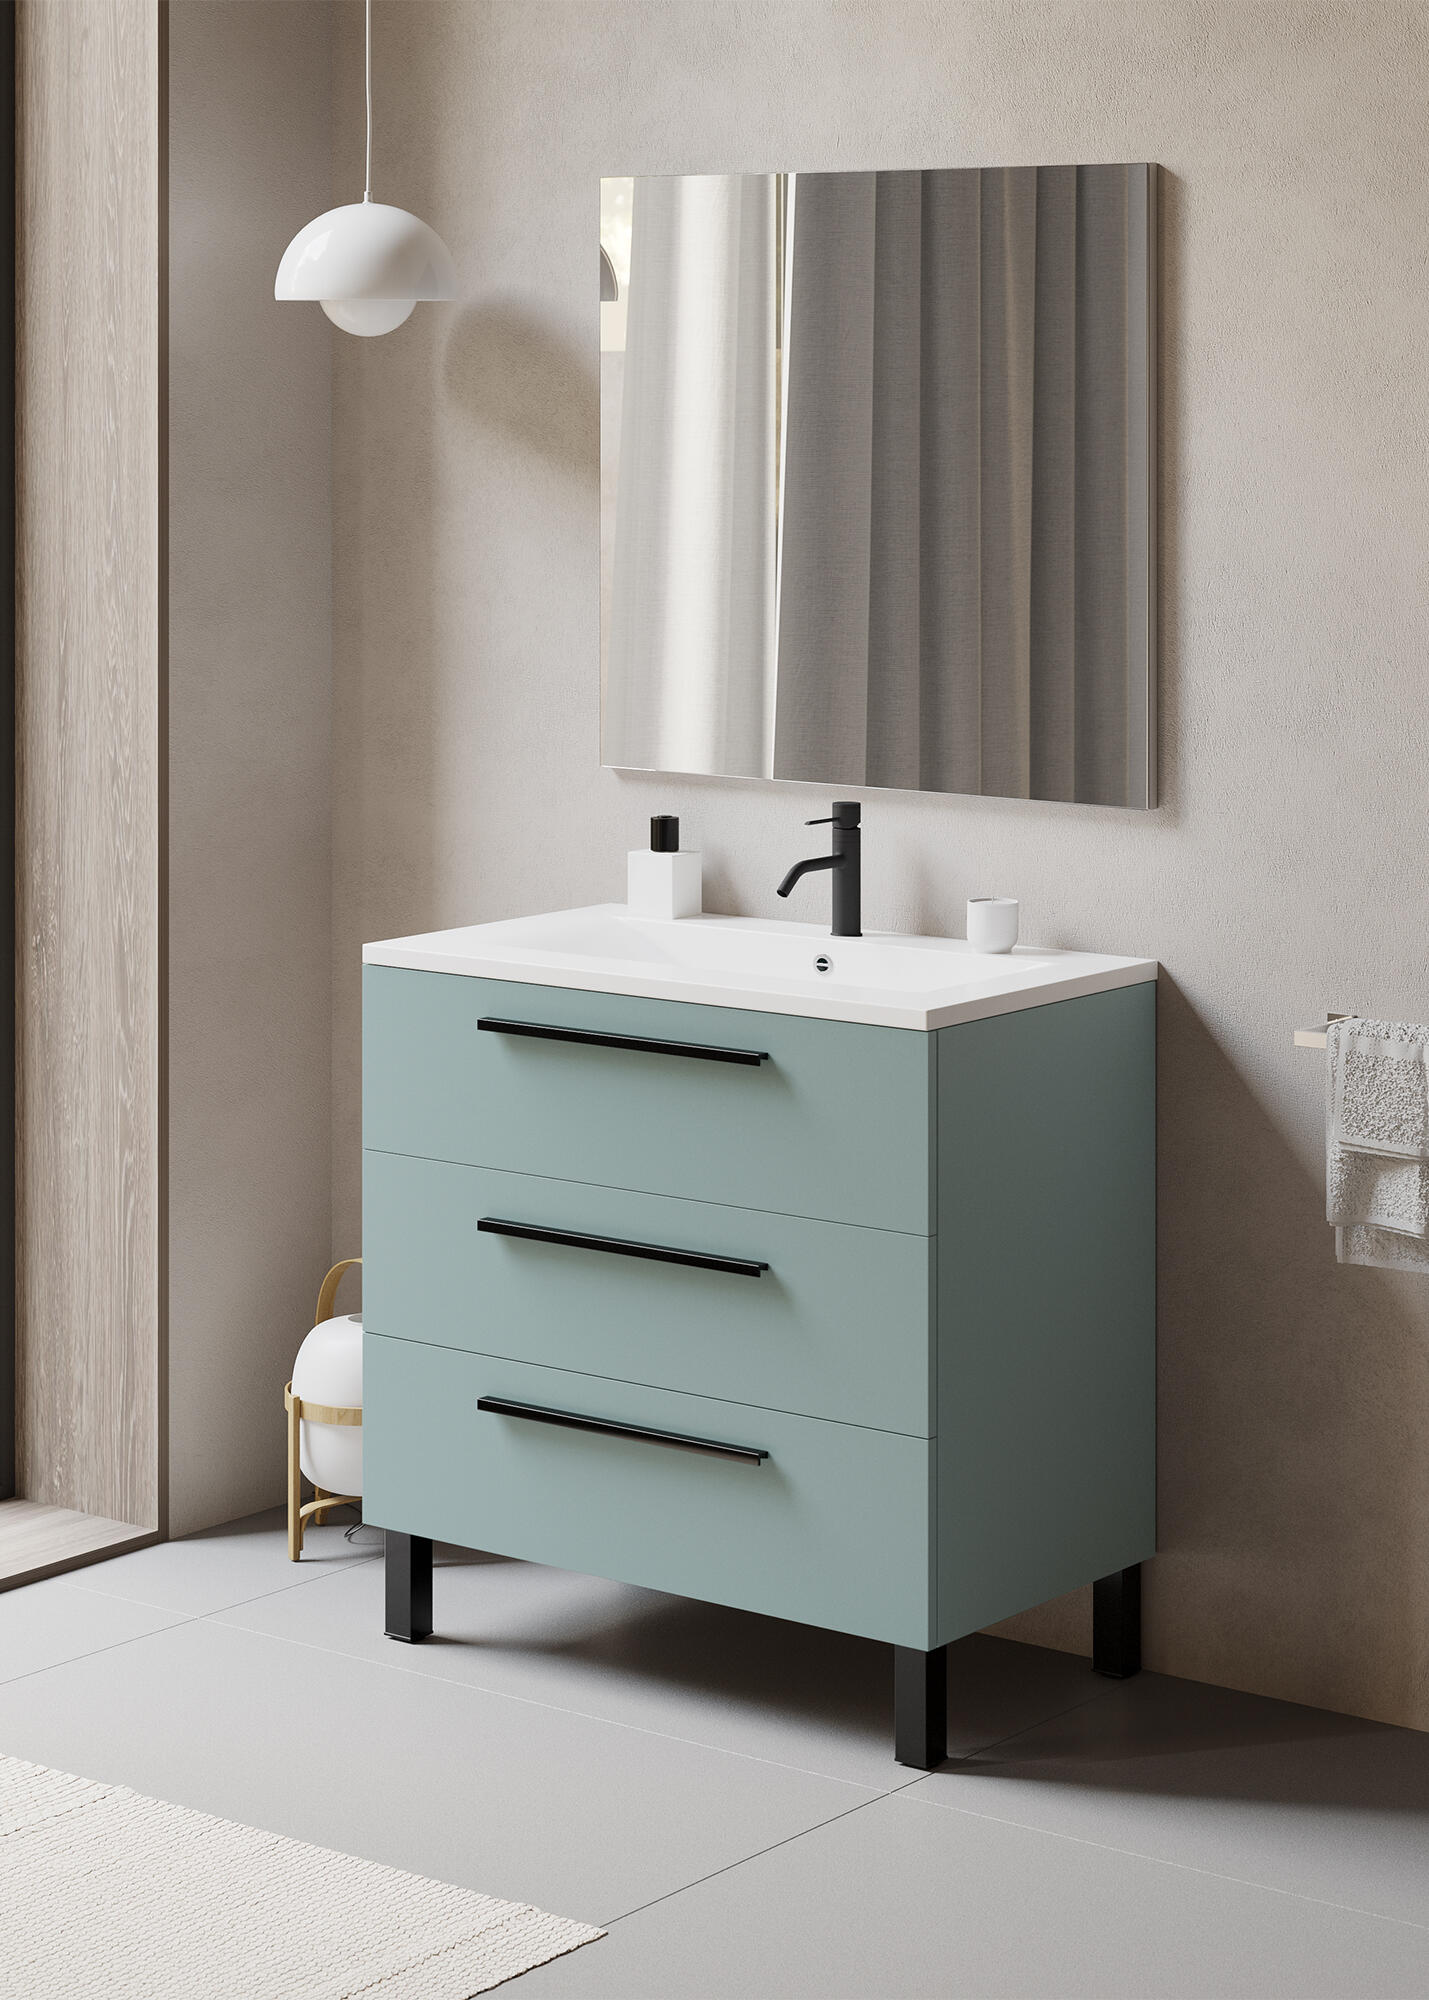 Mueble de baño con lavabo madrid azul 80x45 cm